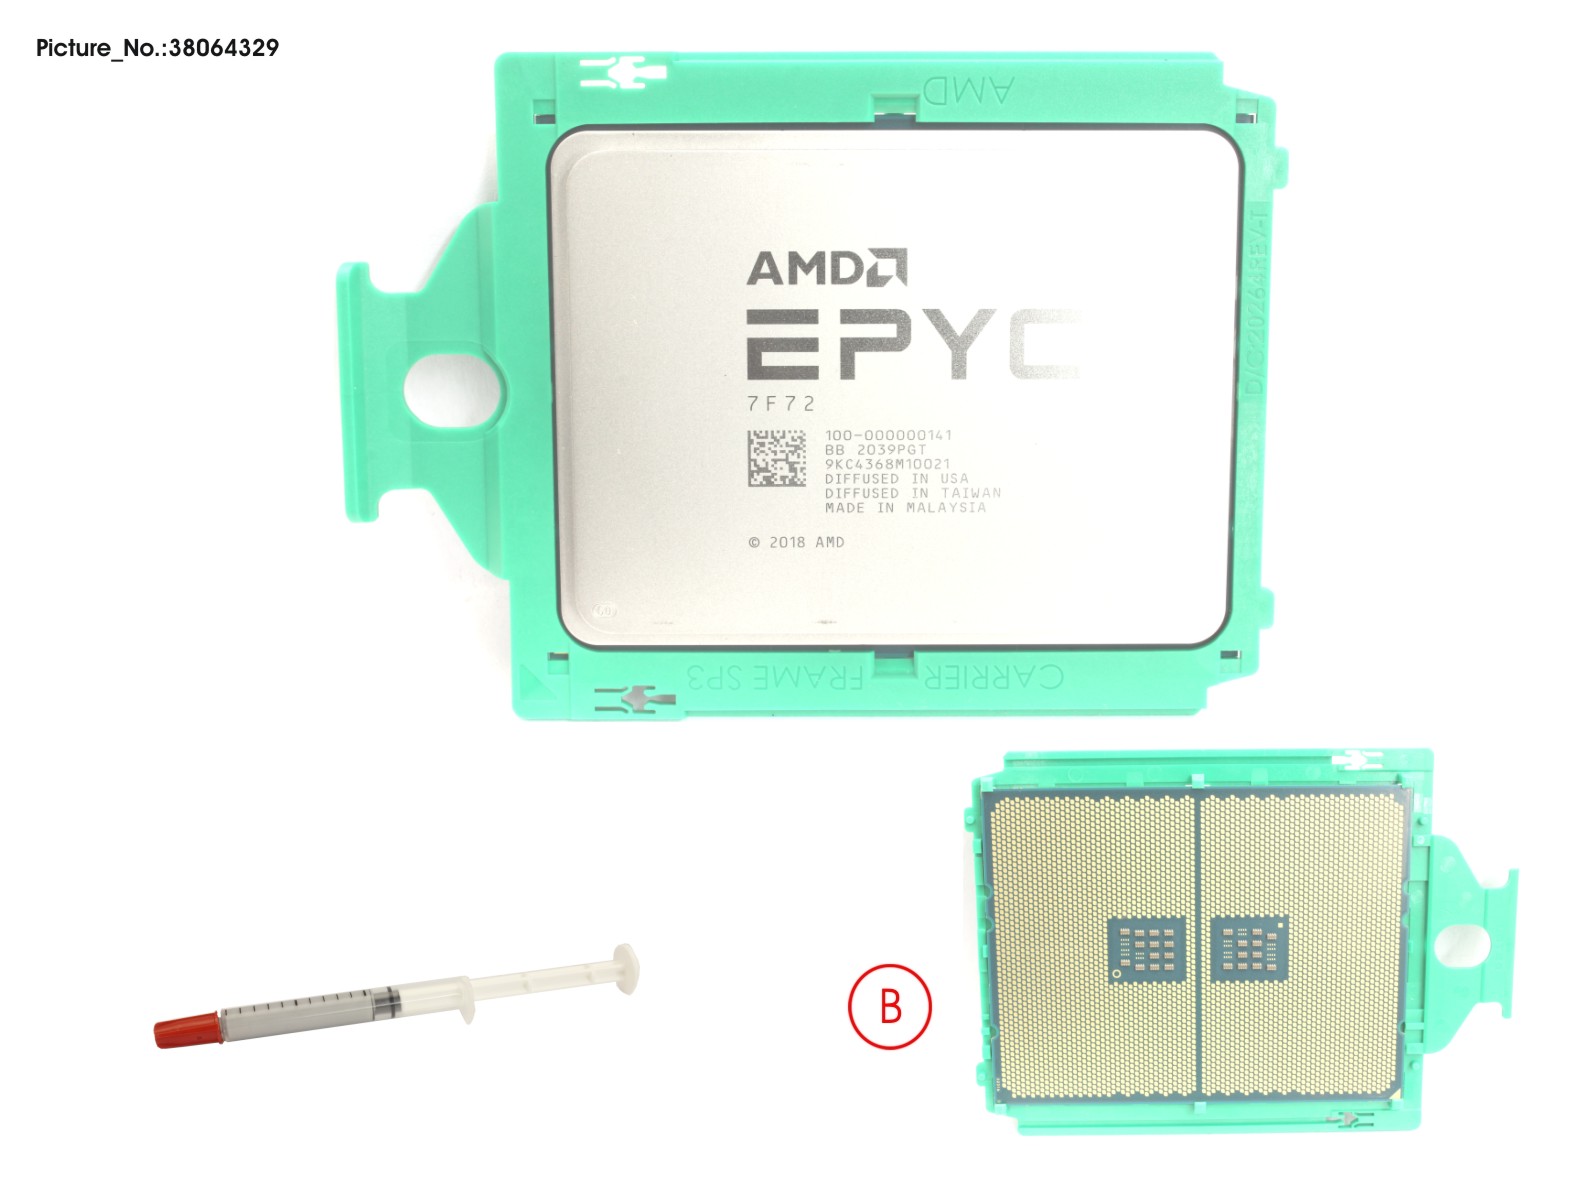 CPU SPARE AMD EPYC 7F72